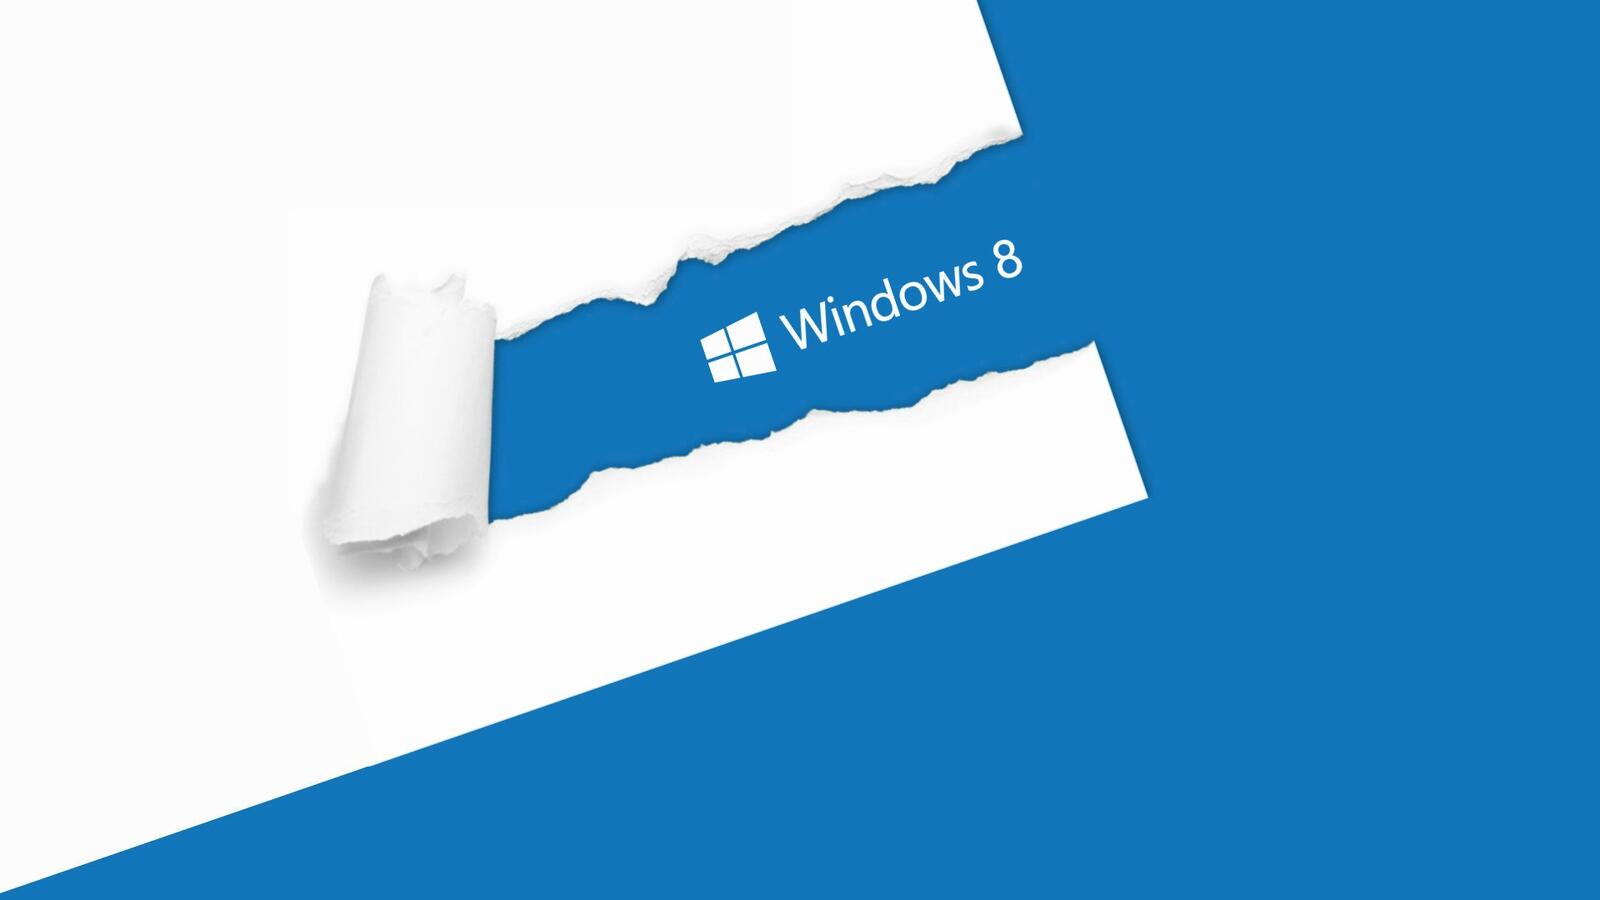 Wallpapers Windows 8 poster inscription on the desktop